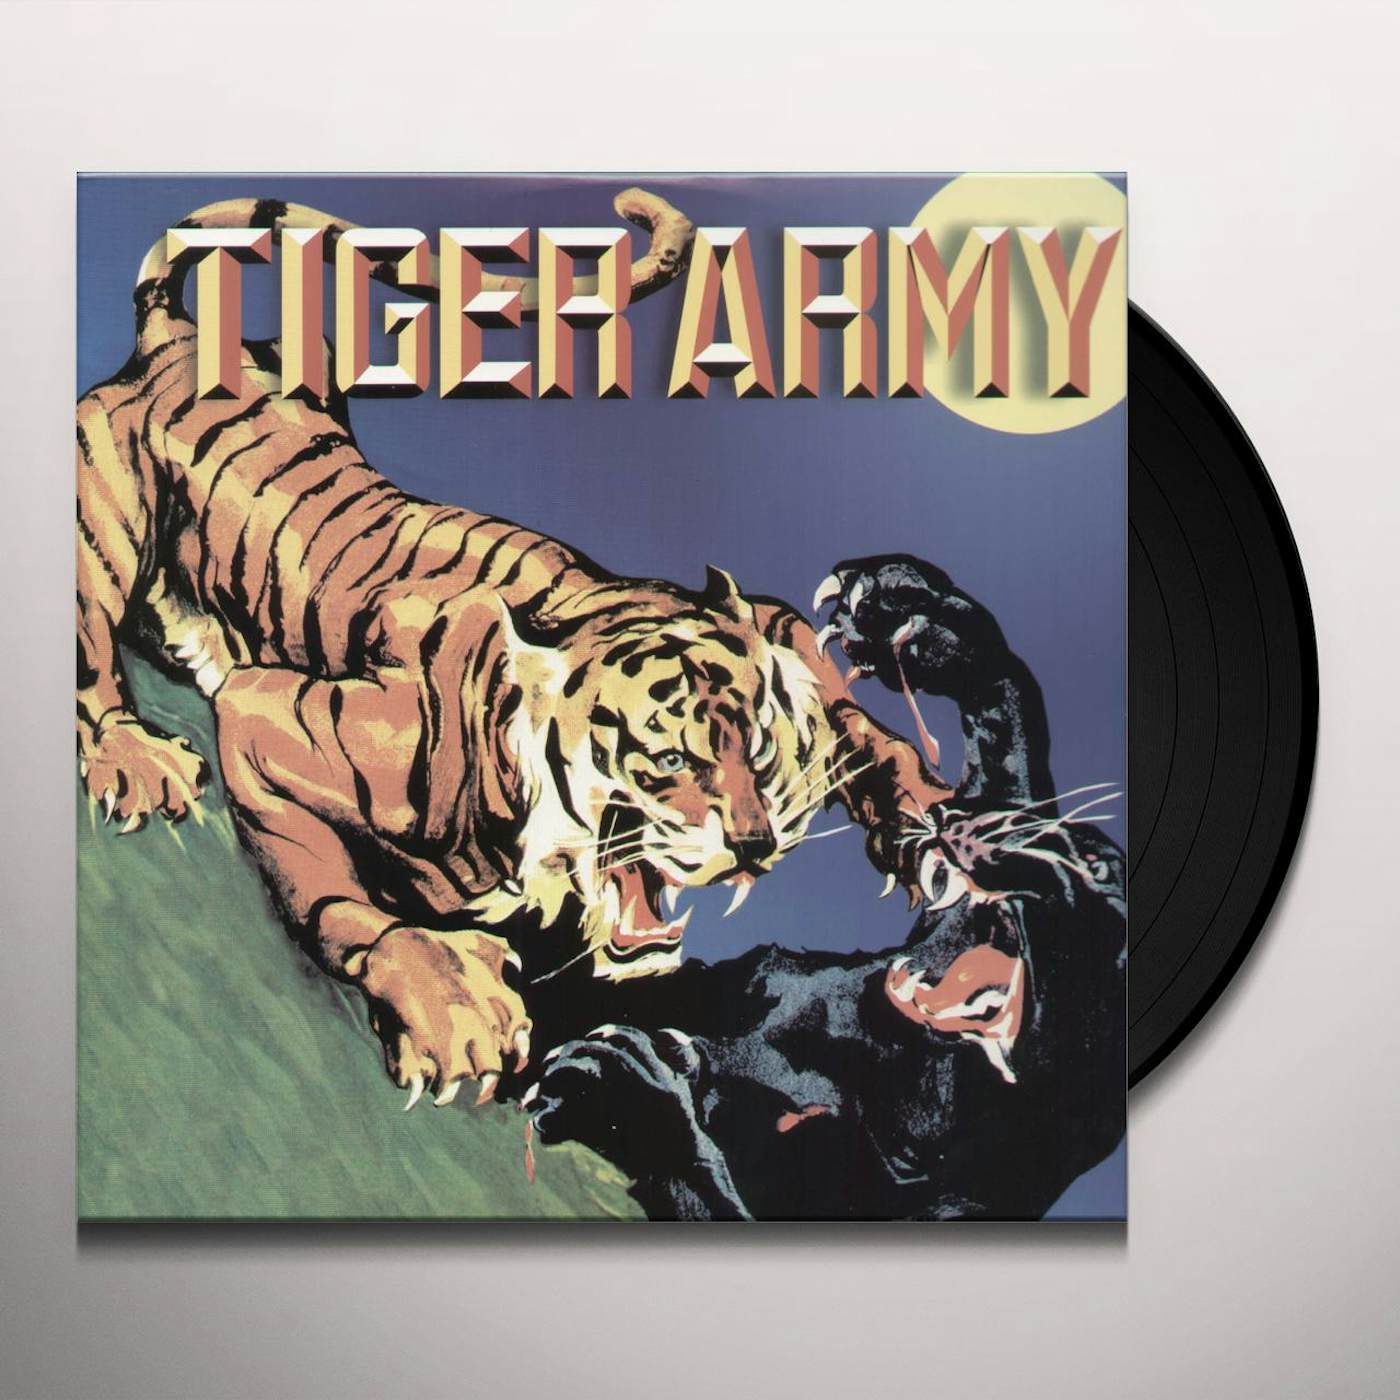  Tiger Army S/T Vinyl Record